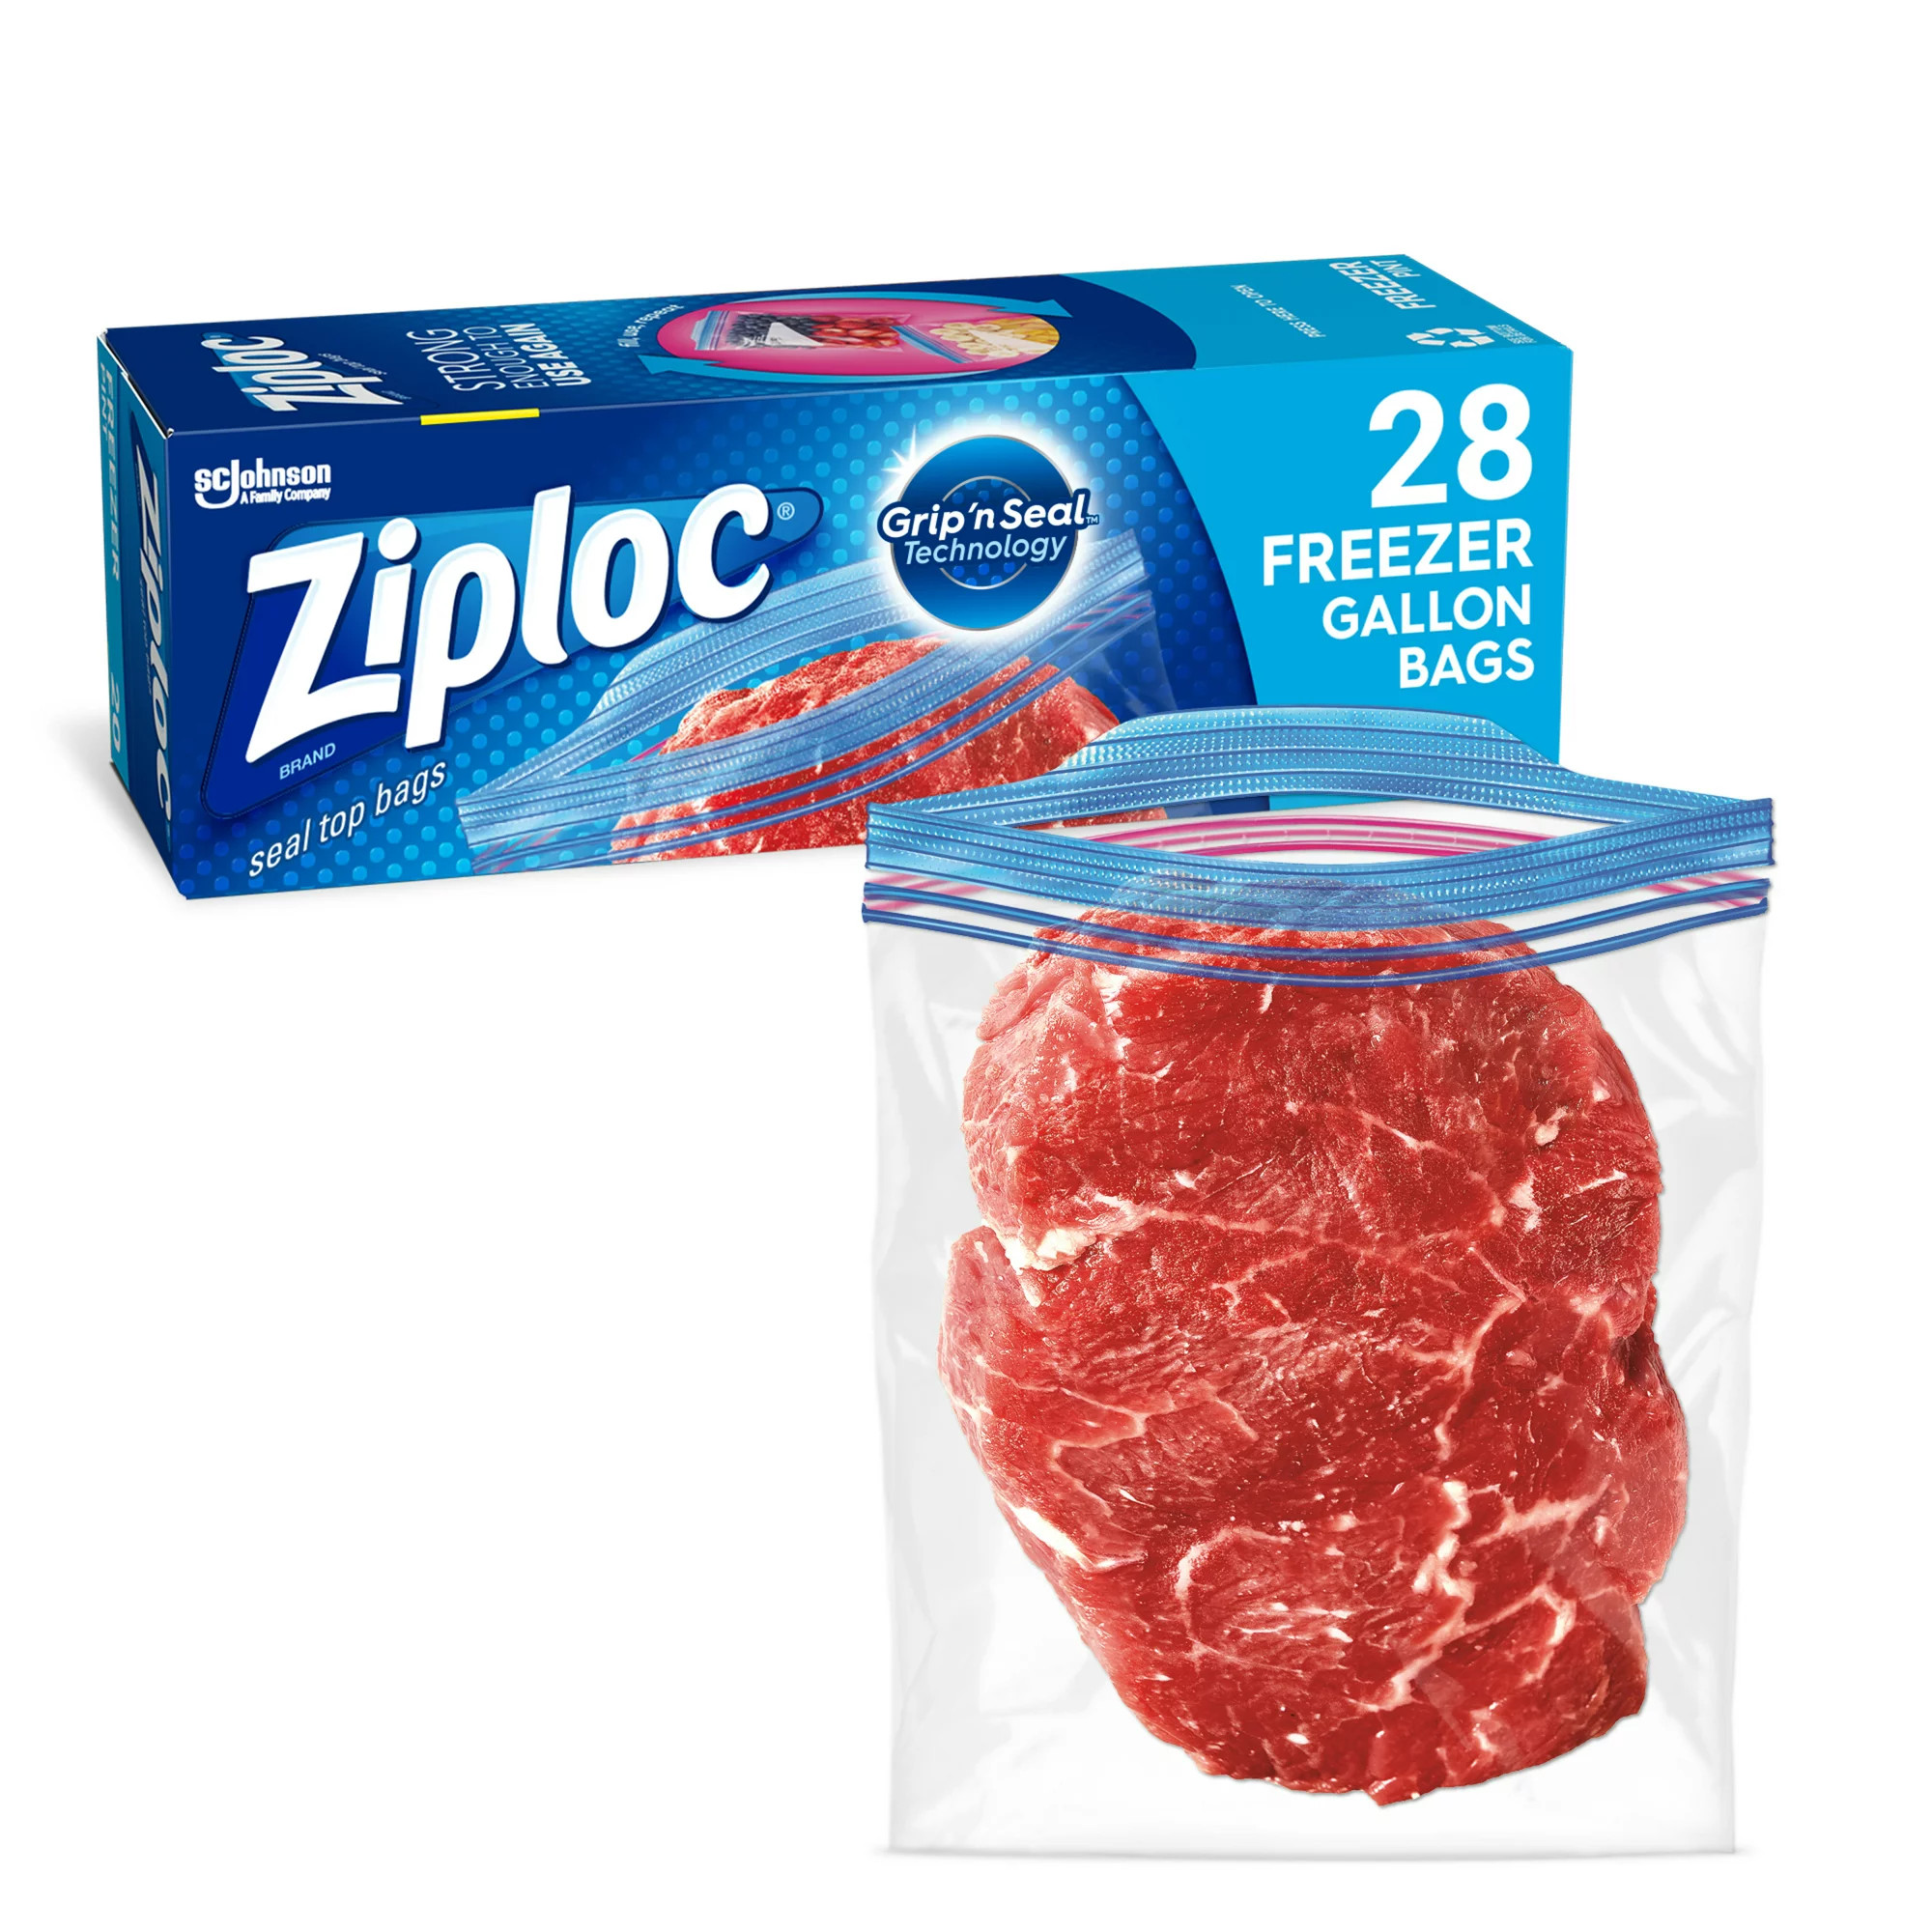 SC Johnson Ziploc Freezer Bags - 1 Gallon Value Pack, 9 / 28 c